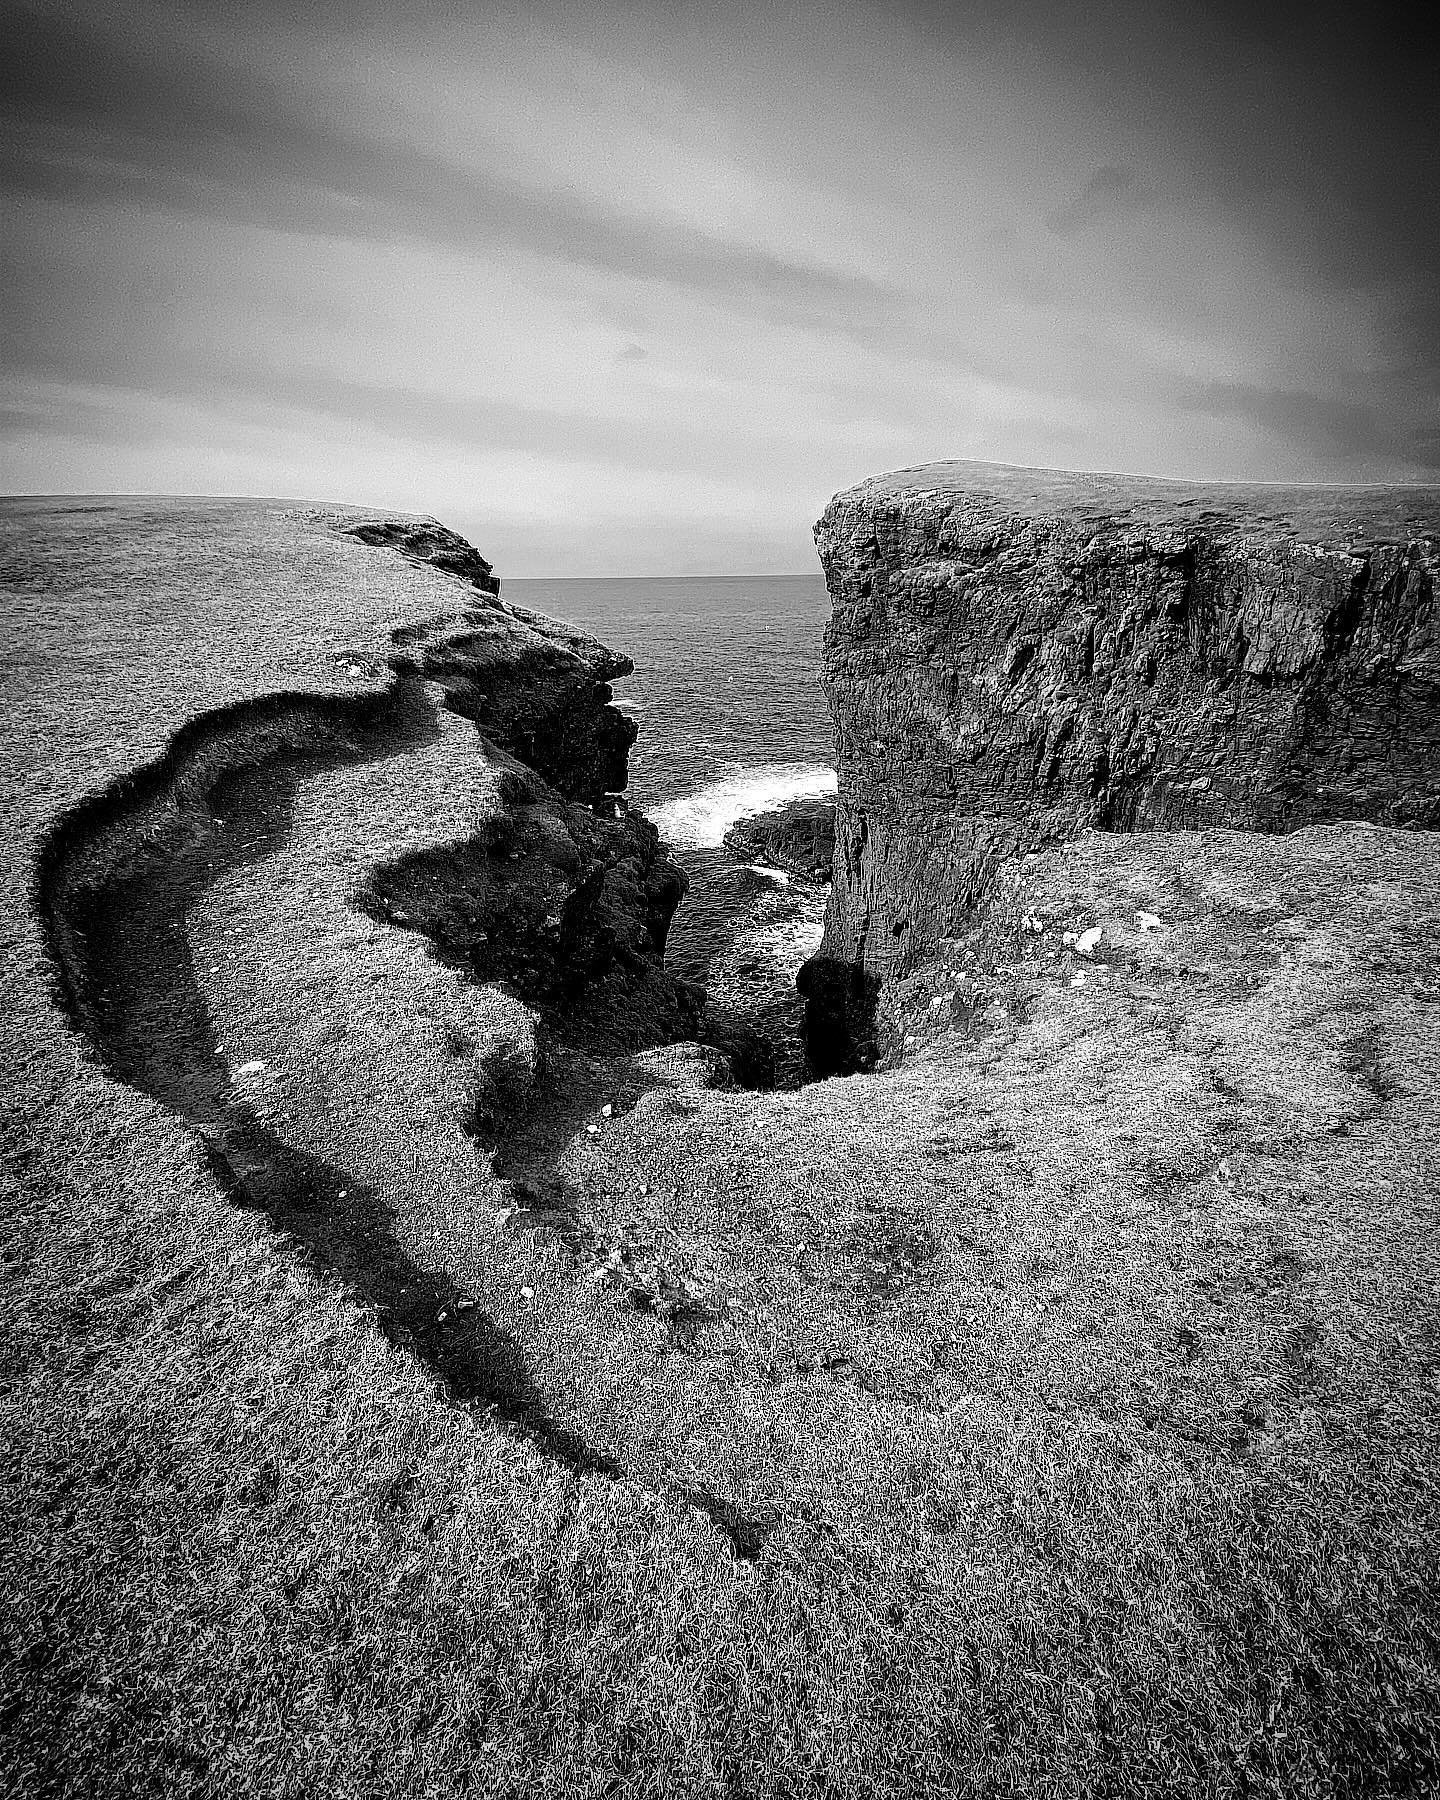 Eshaness. #padeapix #eshaness #eshanesscliffs #northmavine #shetland #northernisles #landscapephotography